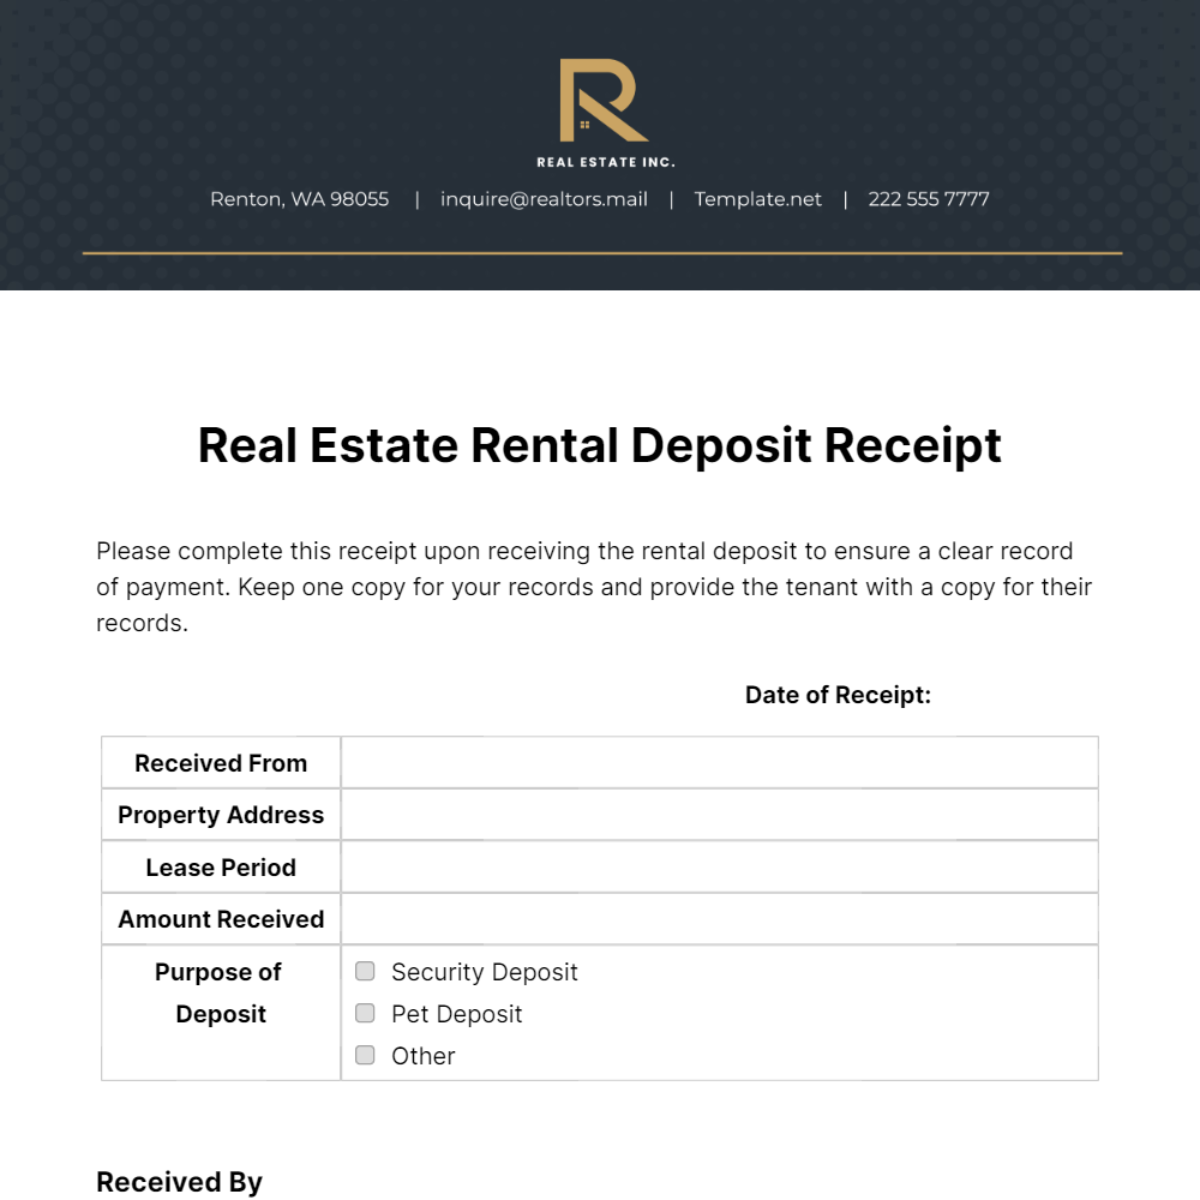 Real Estate Rental Deposit Receipt Template